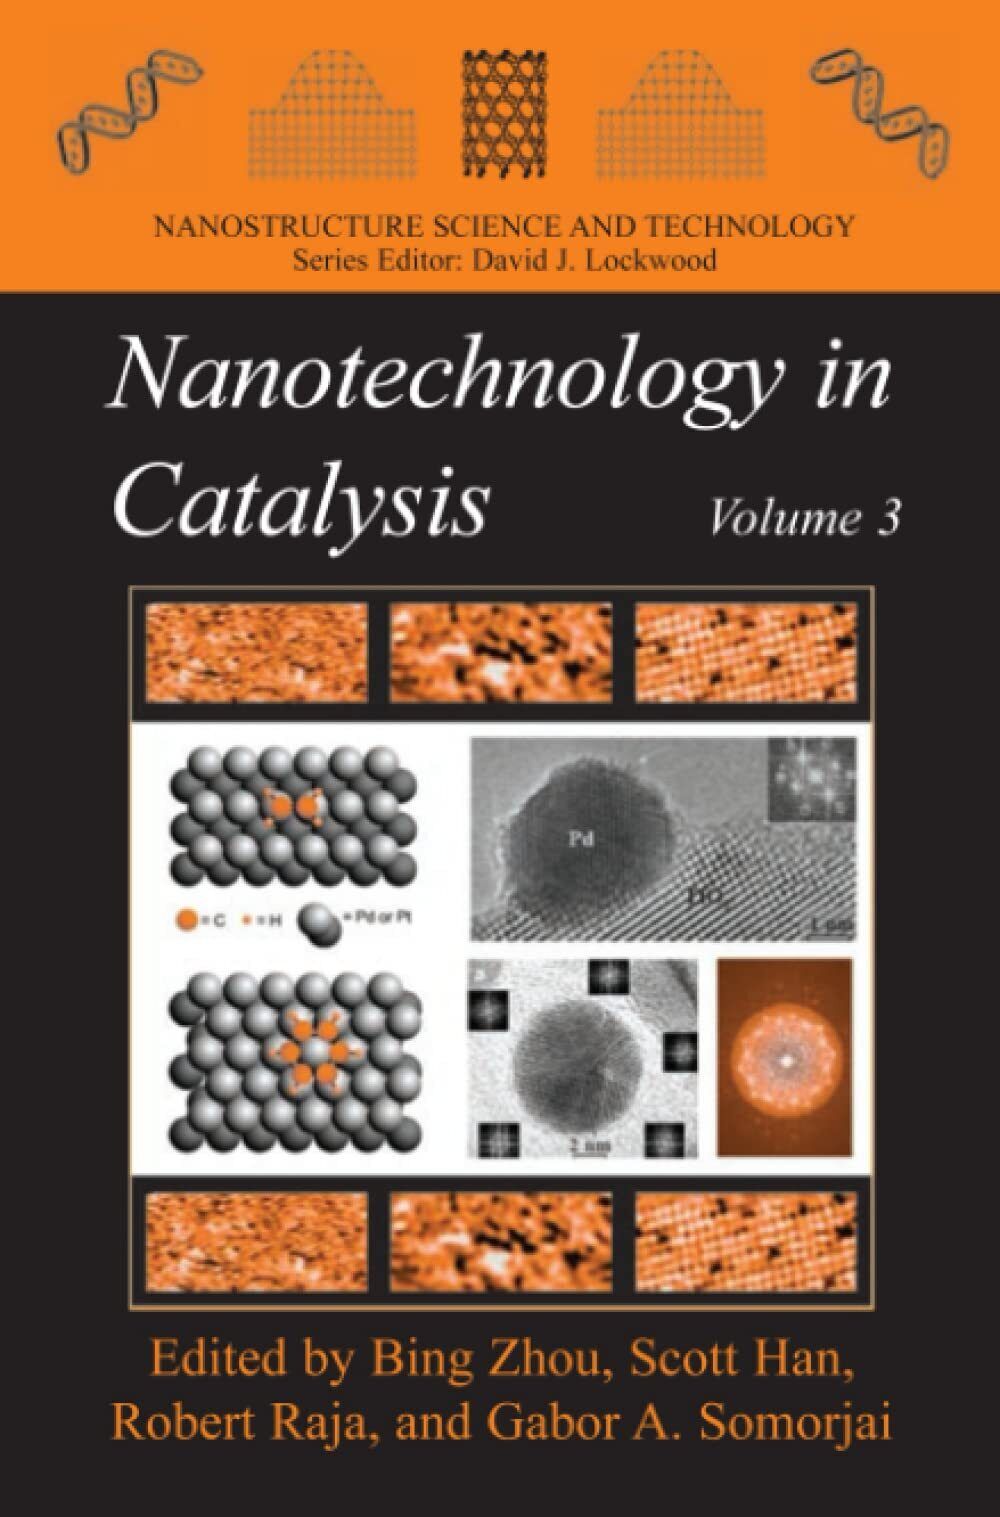 Nanotechnology in Catalysis 3 - Bing Zhou - Springer, 2010